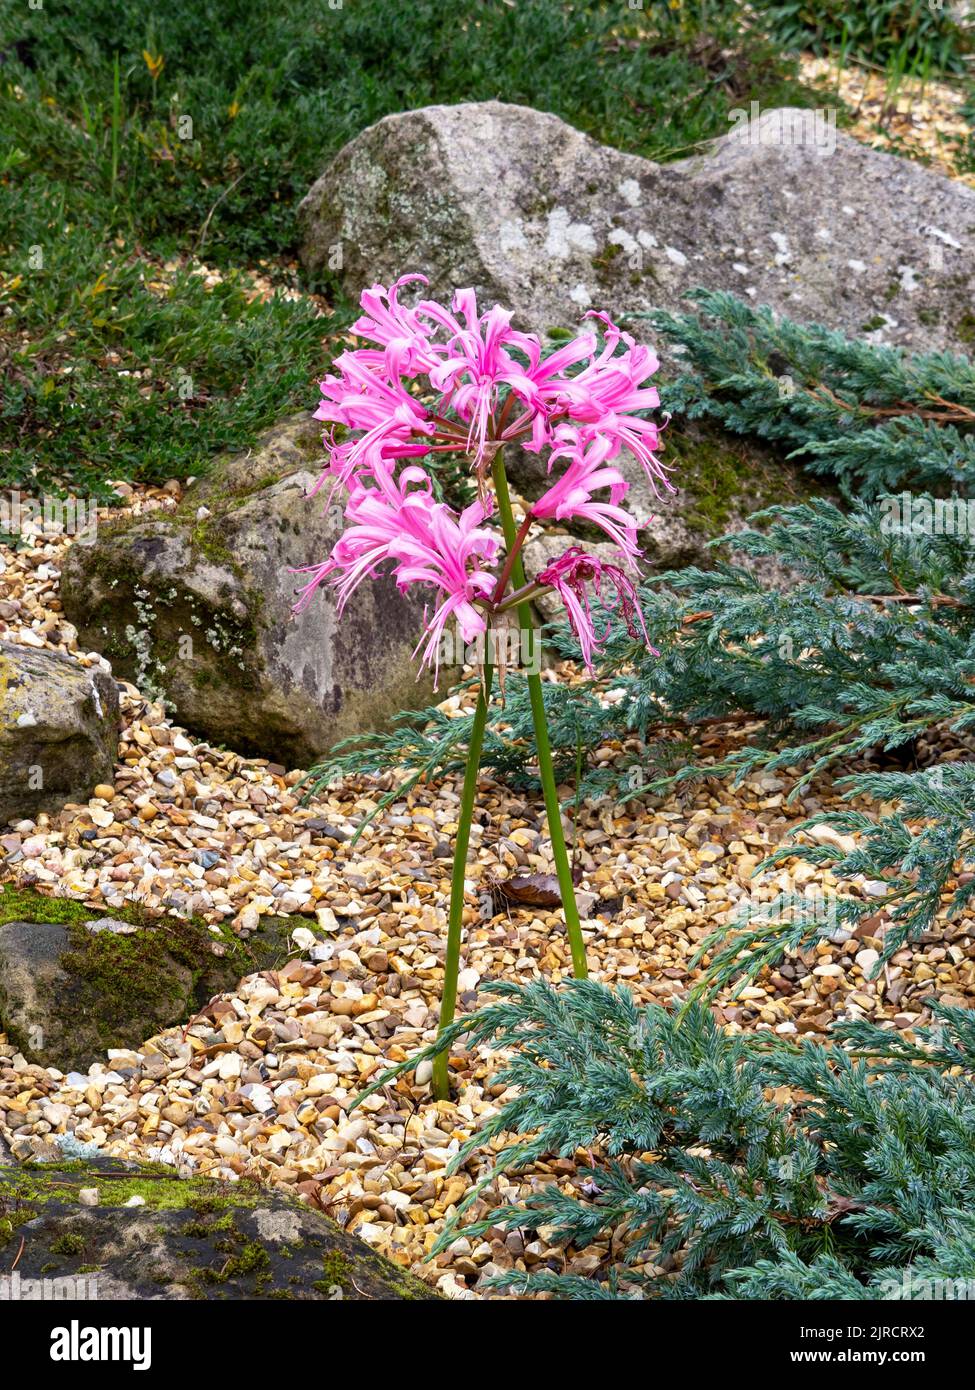 Guernsey lily Nerine bowdenii flowering in a rock garden Stock Photo